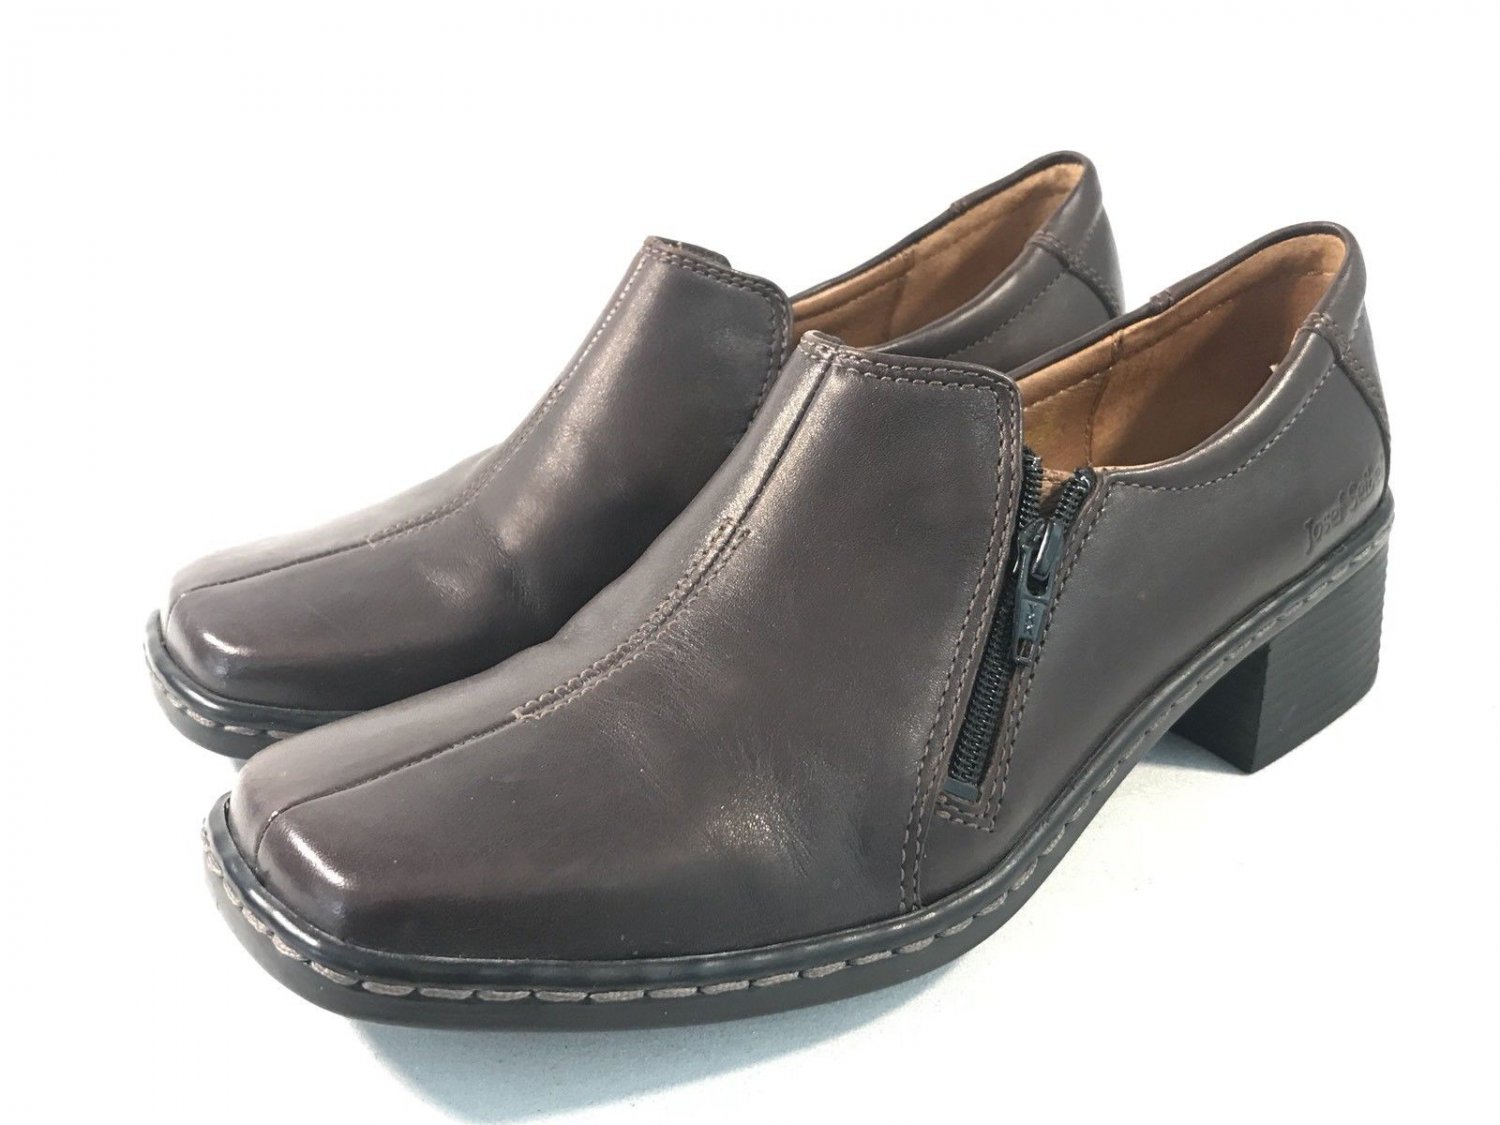 Josef Seibel Loafers Shoes Mocs Slip Ons Brown Women Size 6.5US / 37 EU ...